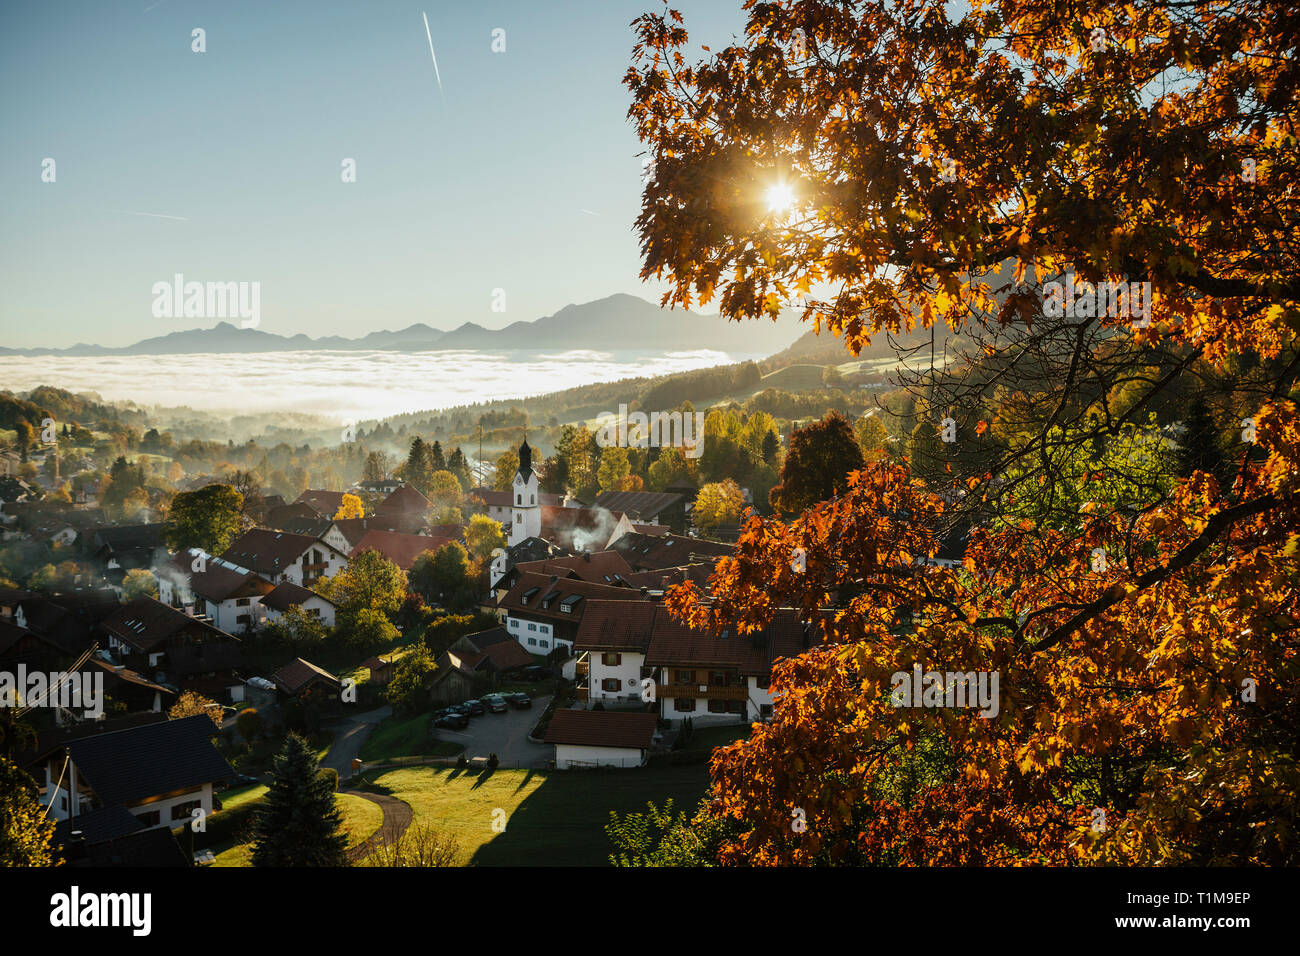 Sunny, idyllic scenic autumn view of townscape, Bad Kohlgrub, Bayern, Germany Stock Photo